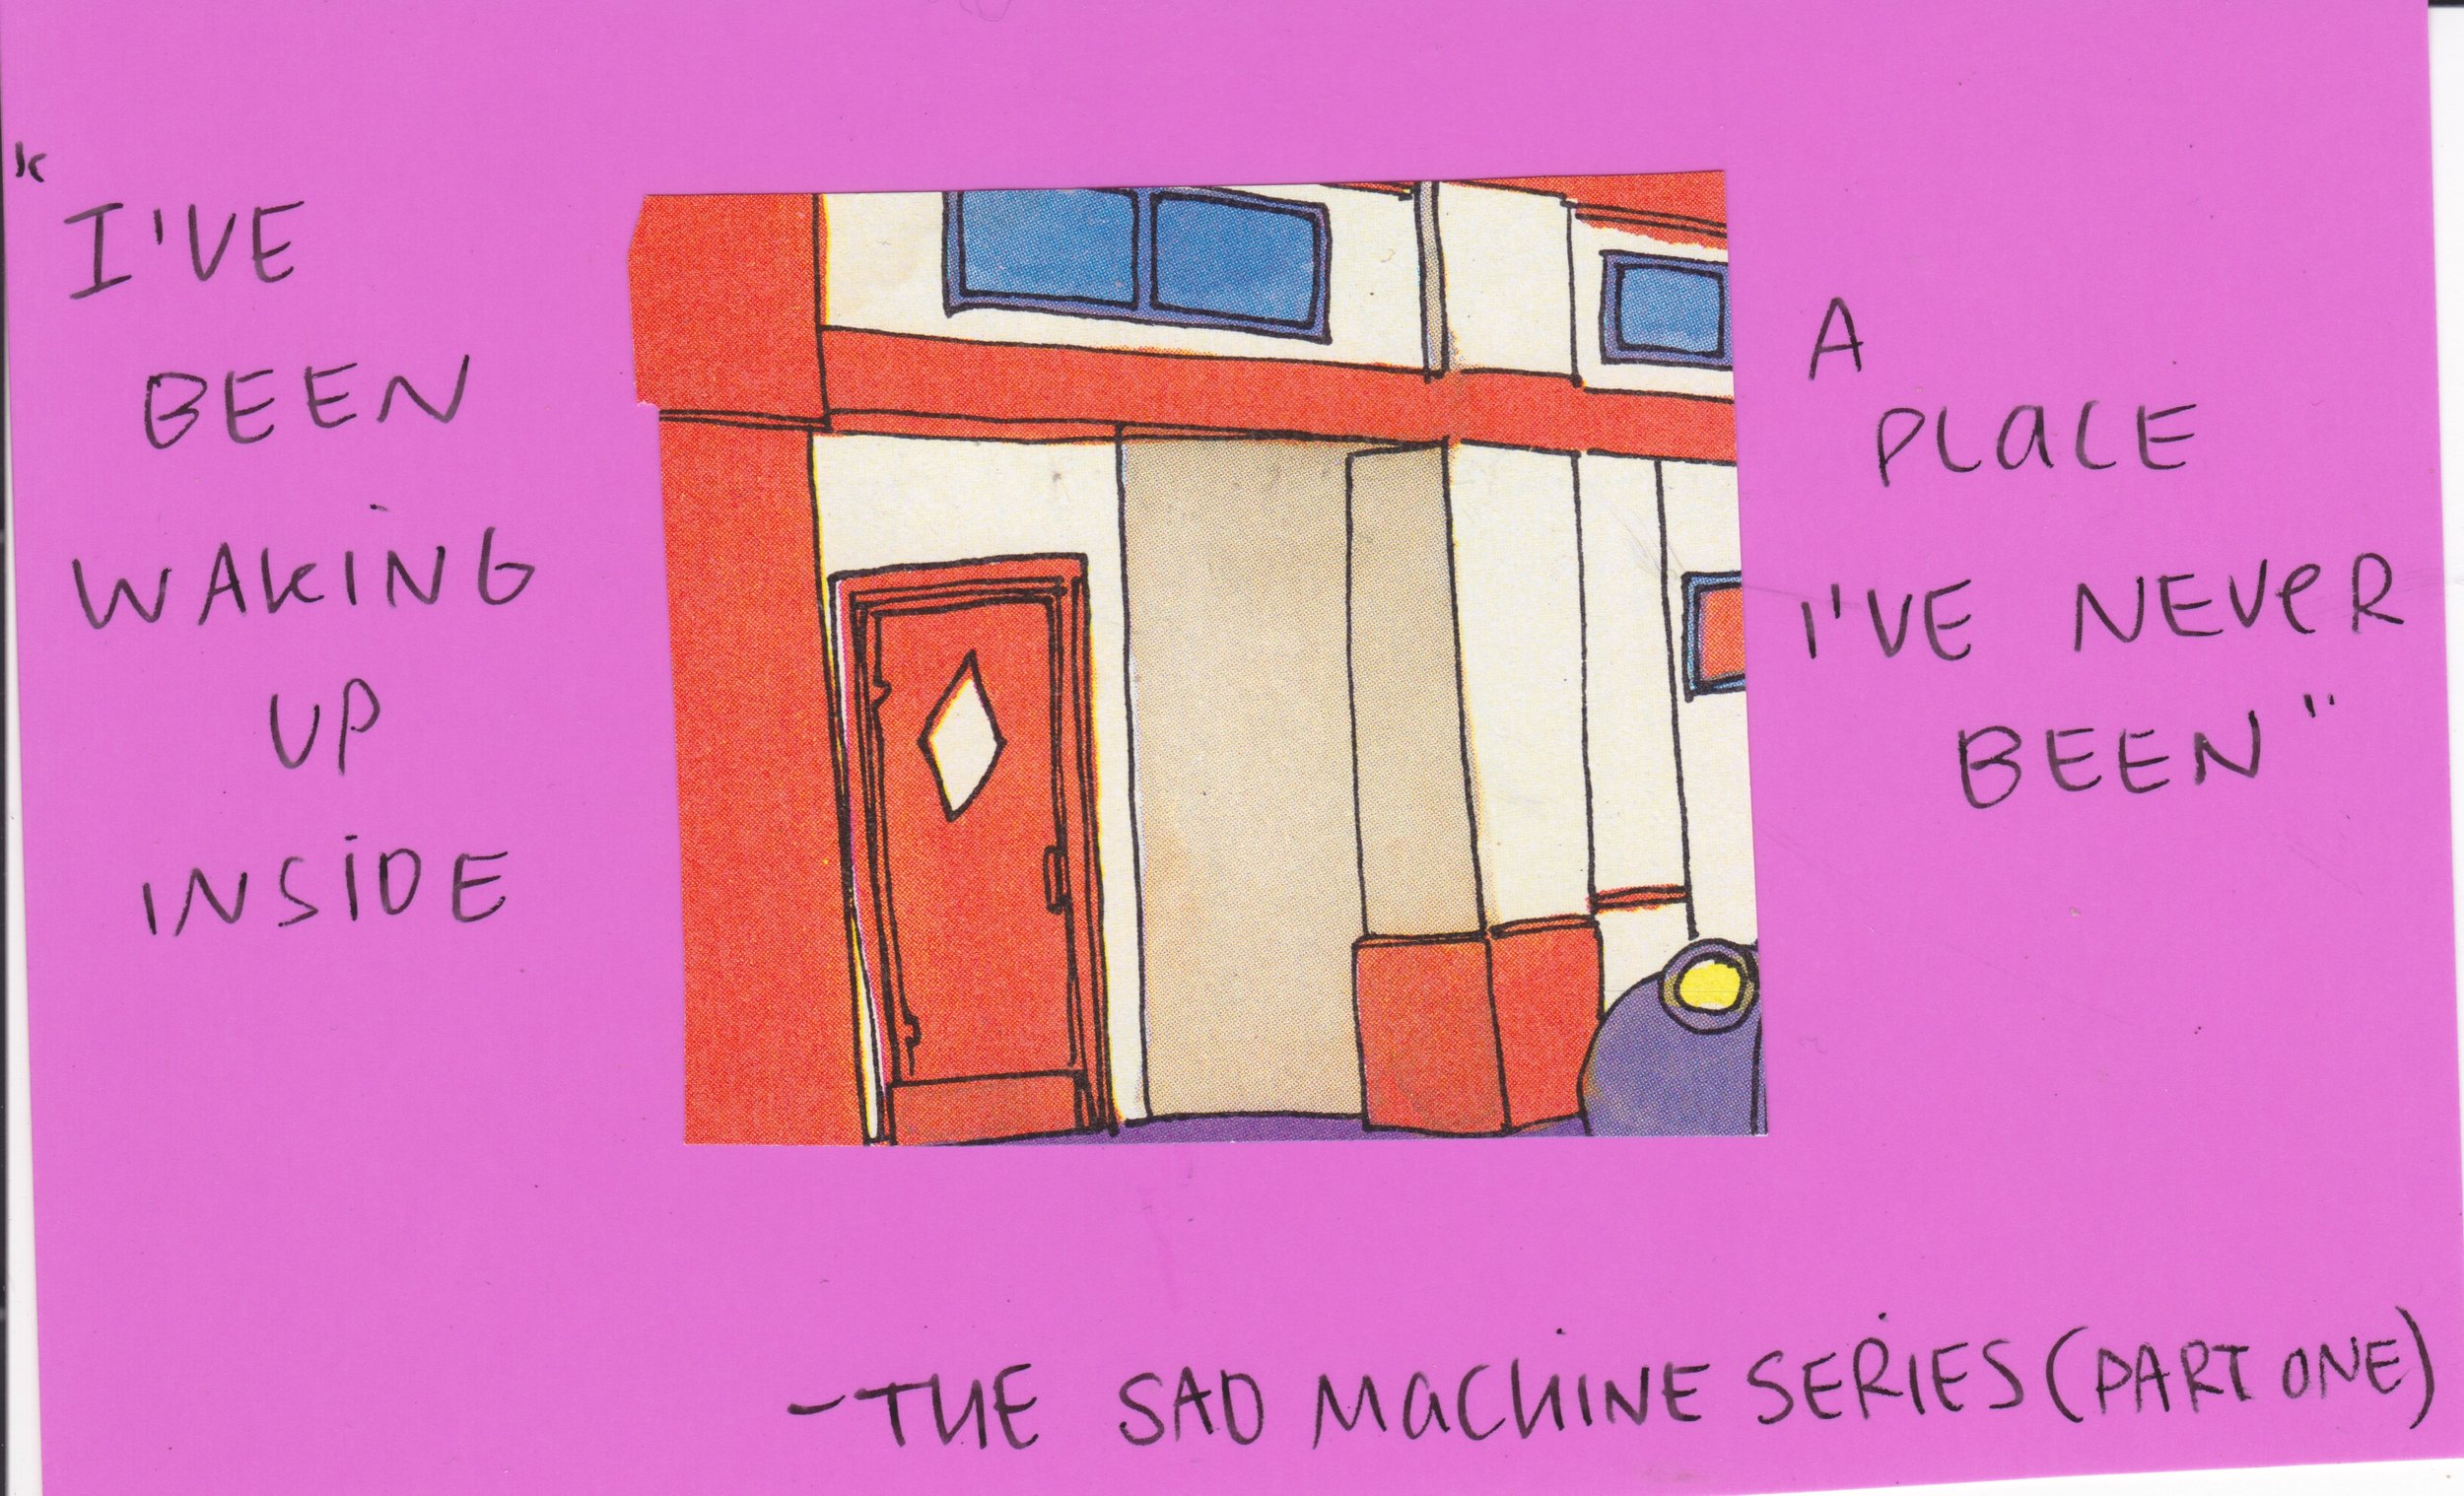 Sad Machine Series Quotes 9.jpeg